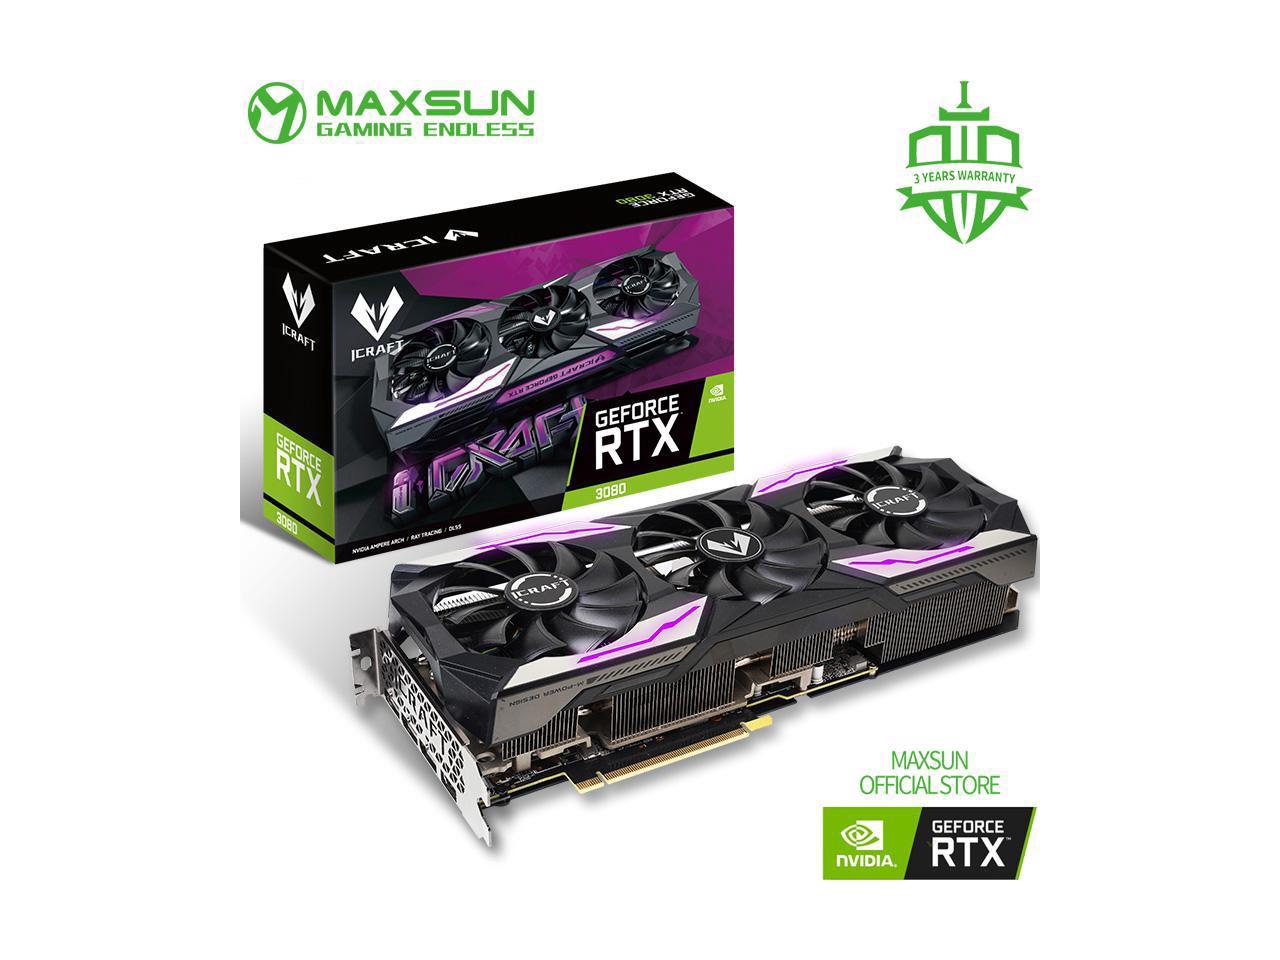 MAXSUN GeForce RTX 3080 iCraft OC 10GB GDDR6X 320-Bit Computer Video Gaming Graphics Card GPU RGB LED $699.99 ($175 promotional giftcard)